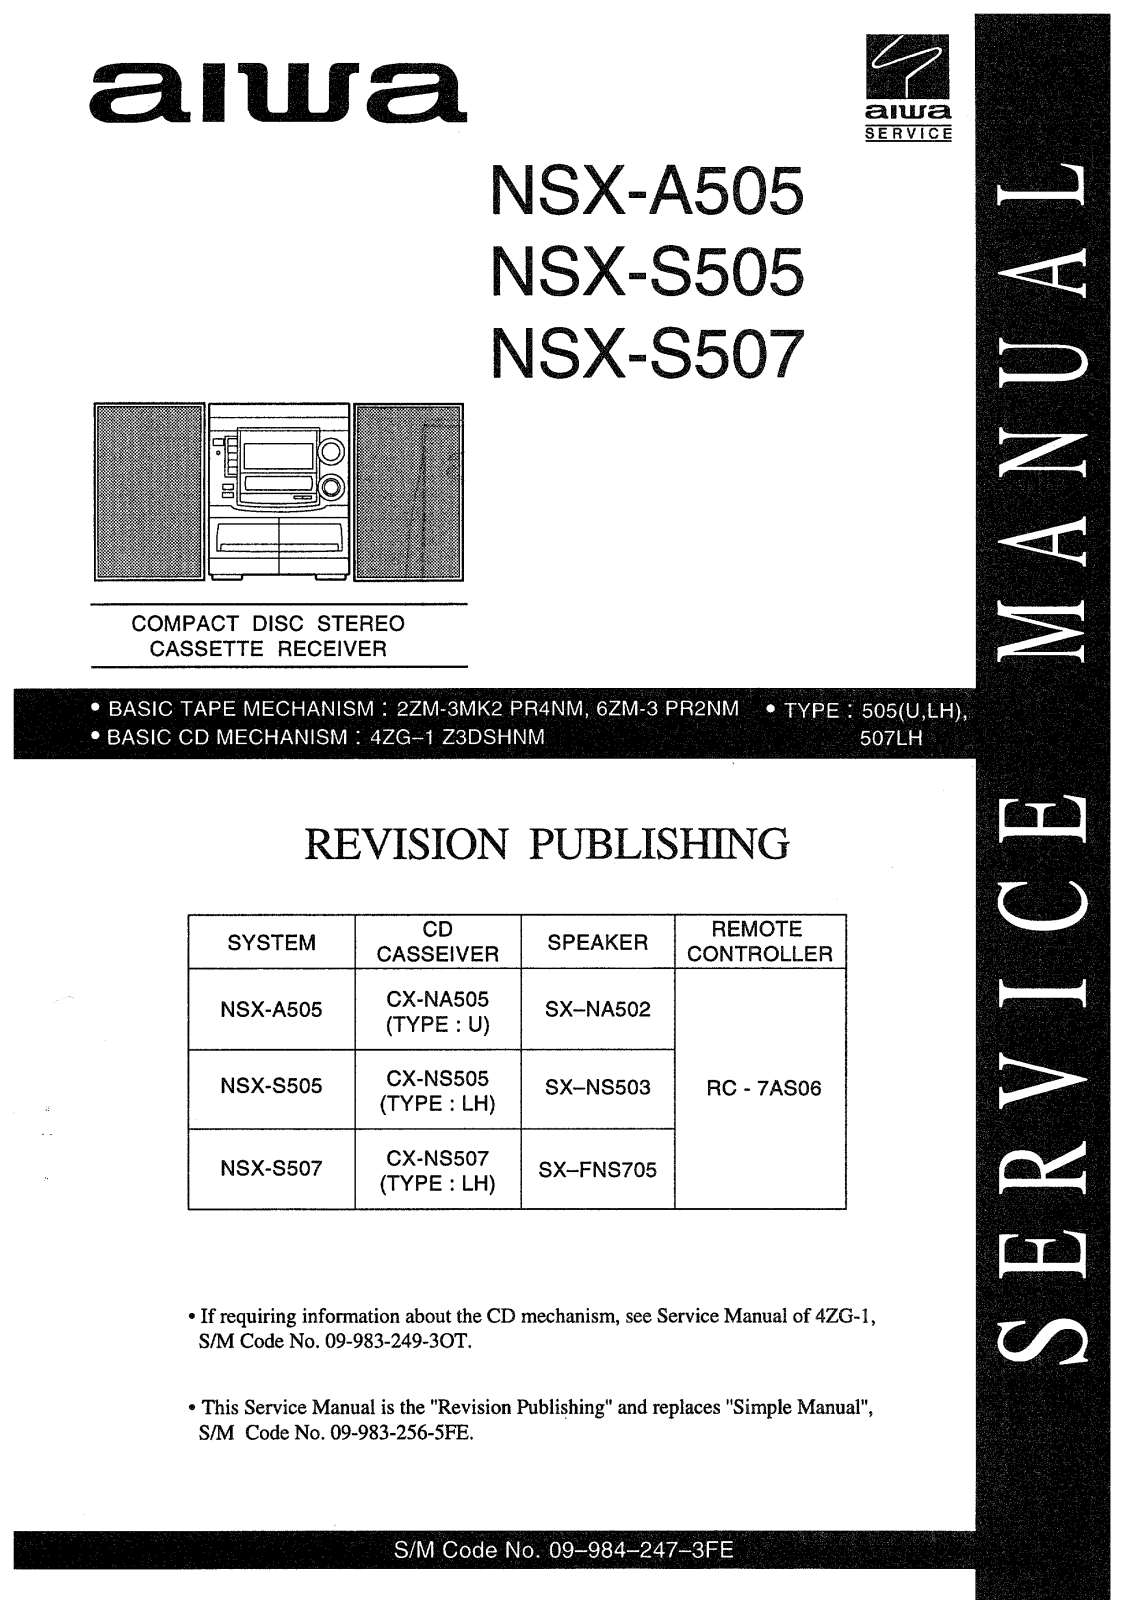 AIWA NSX-A505, NSX-S505, NSX-S507 Service Manual